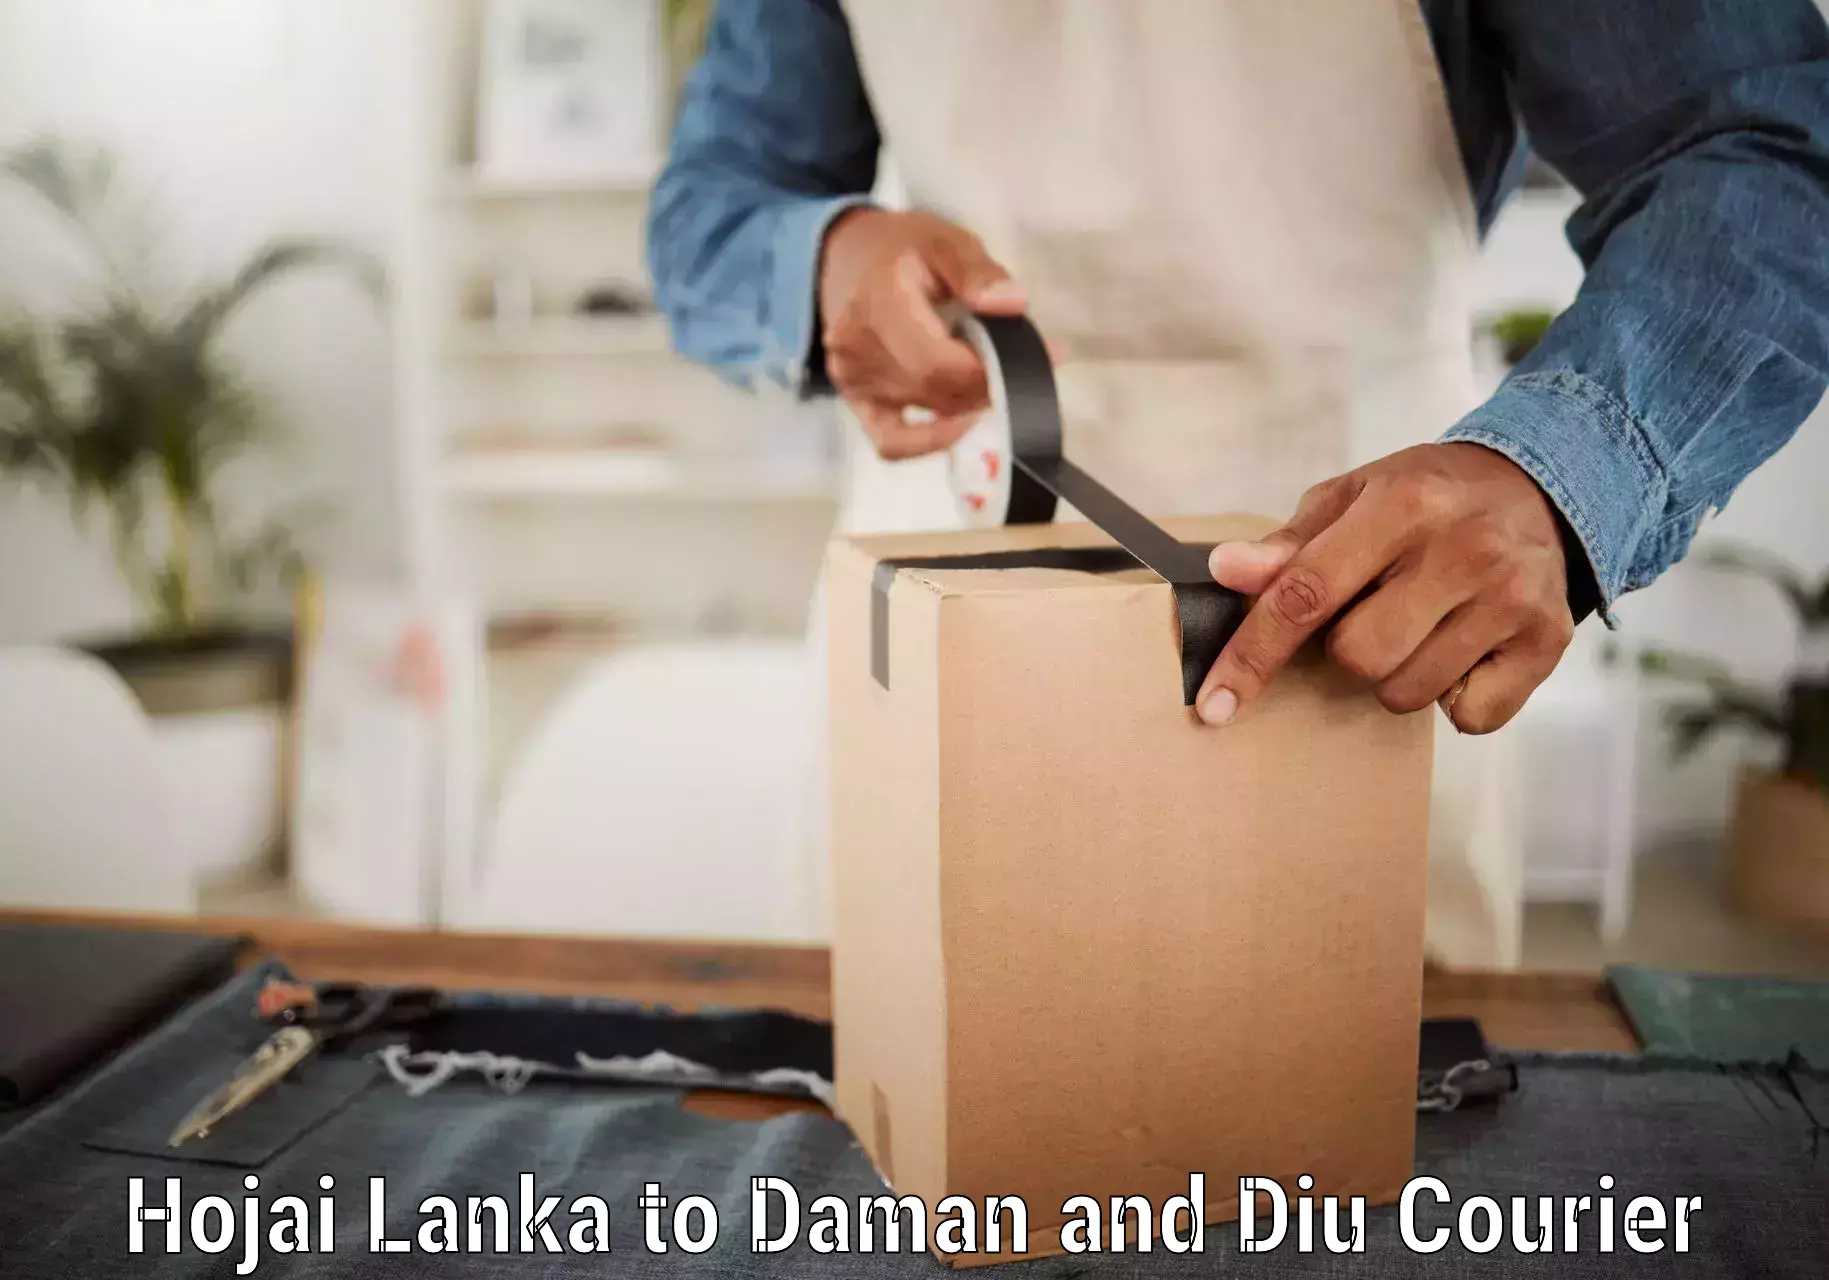 Courier service efficiency Hojai Lanka to Daman and Diu